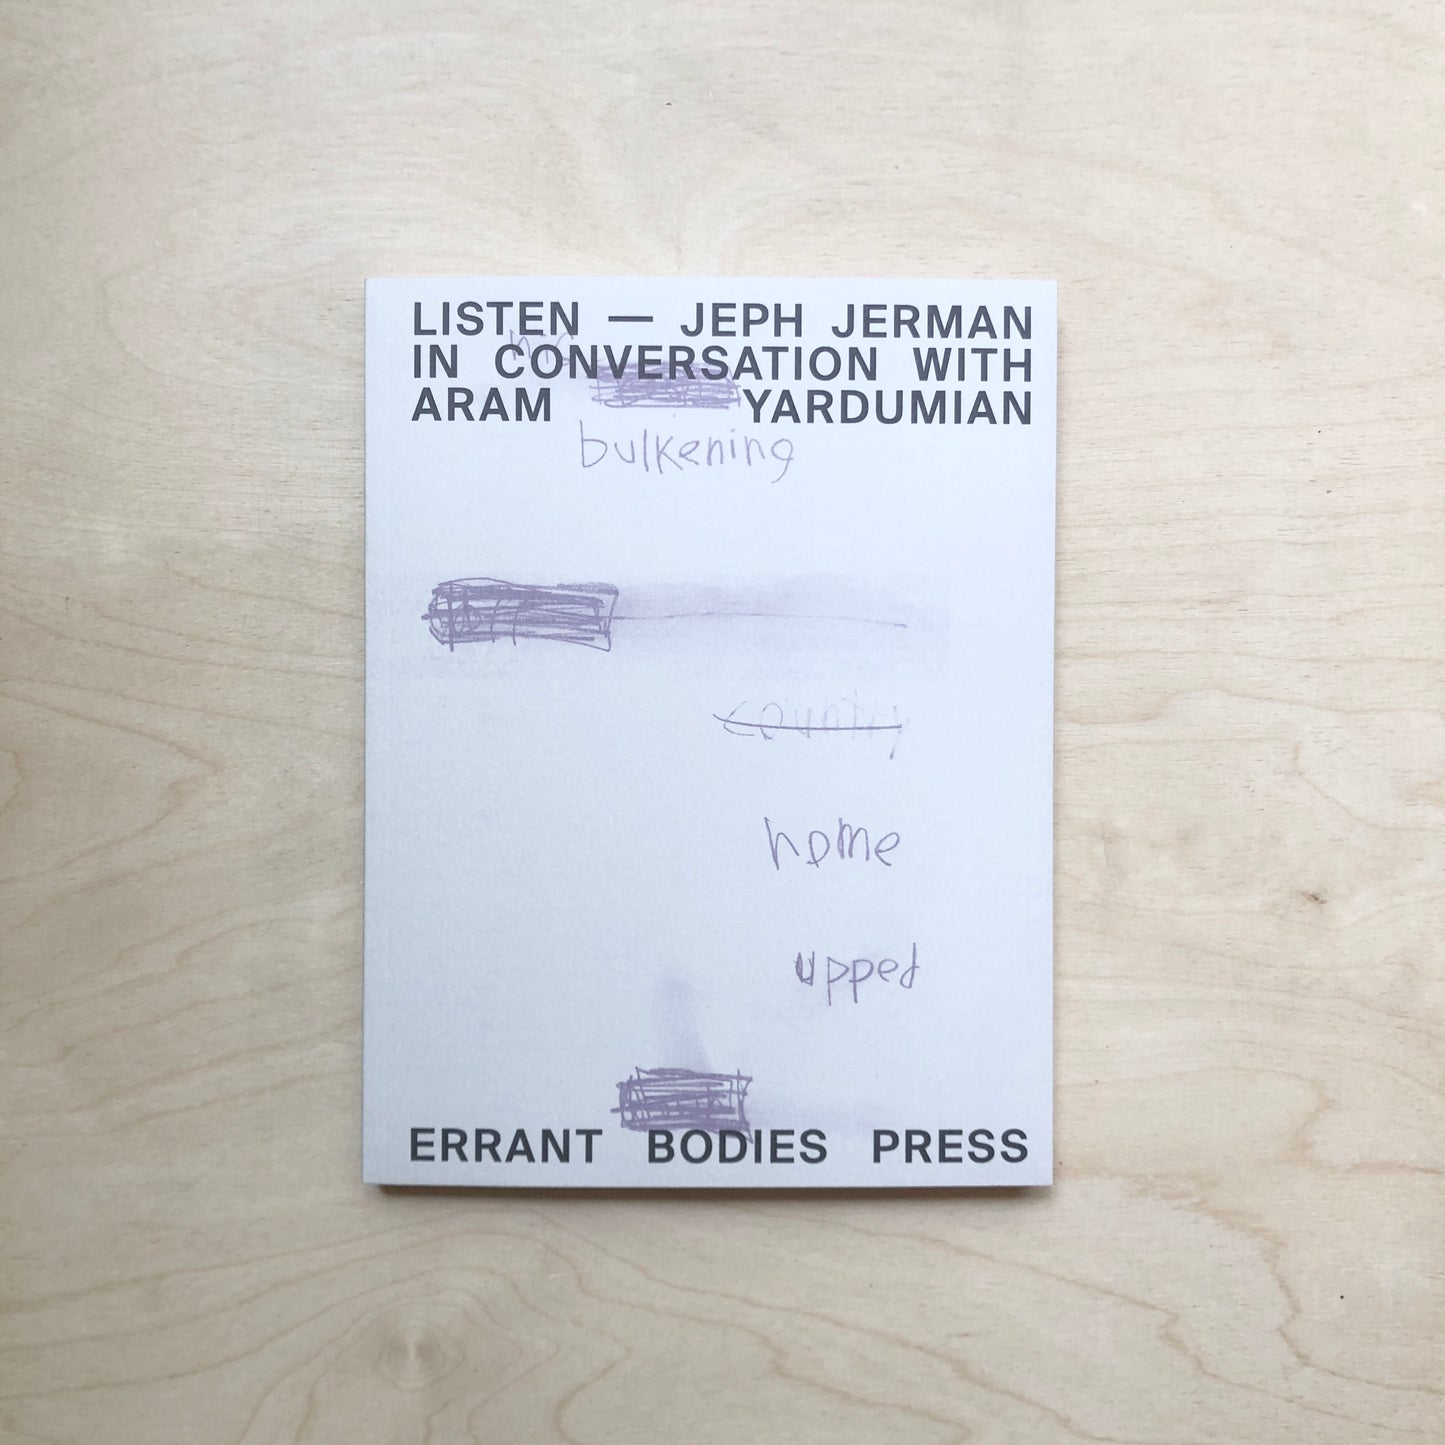 Listen – Jeph Jerman in conversation with Aram Yardumian